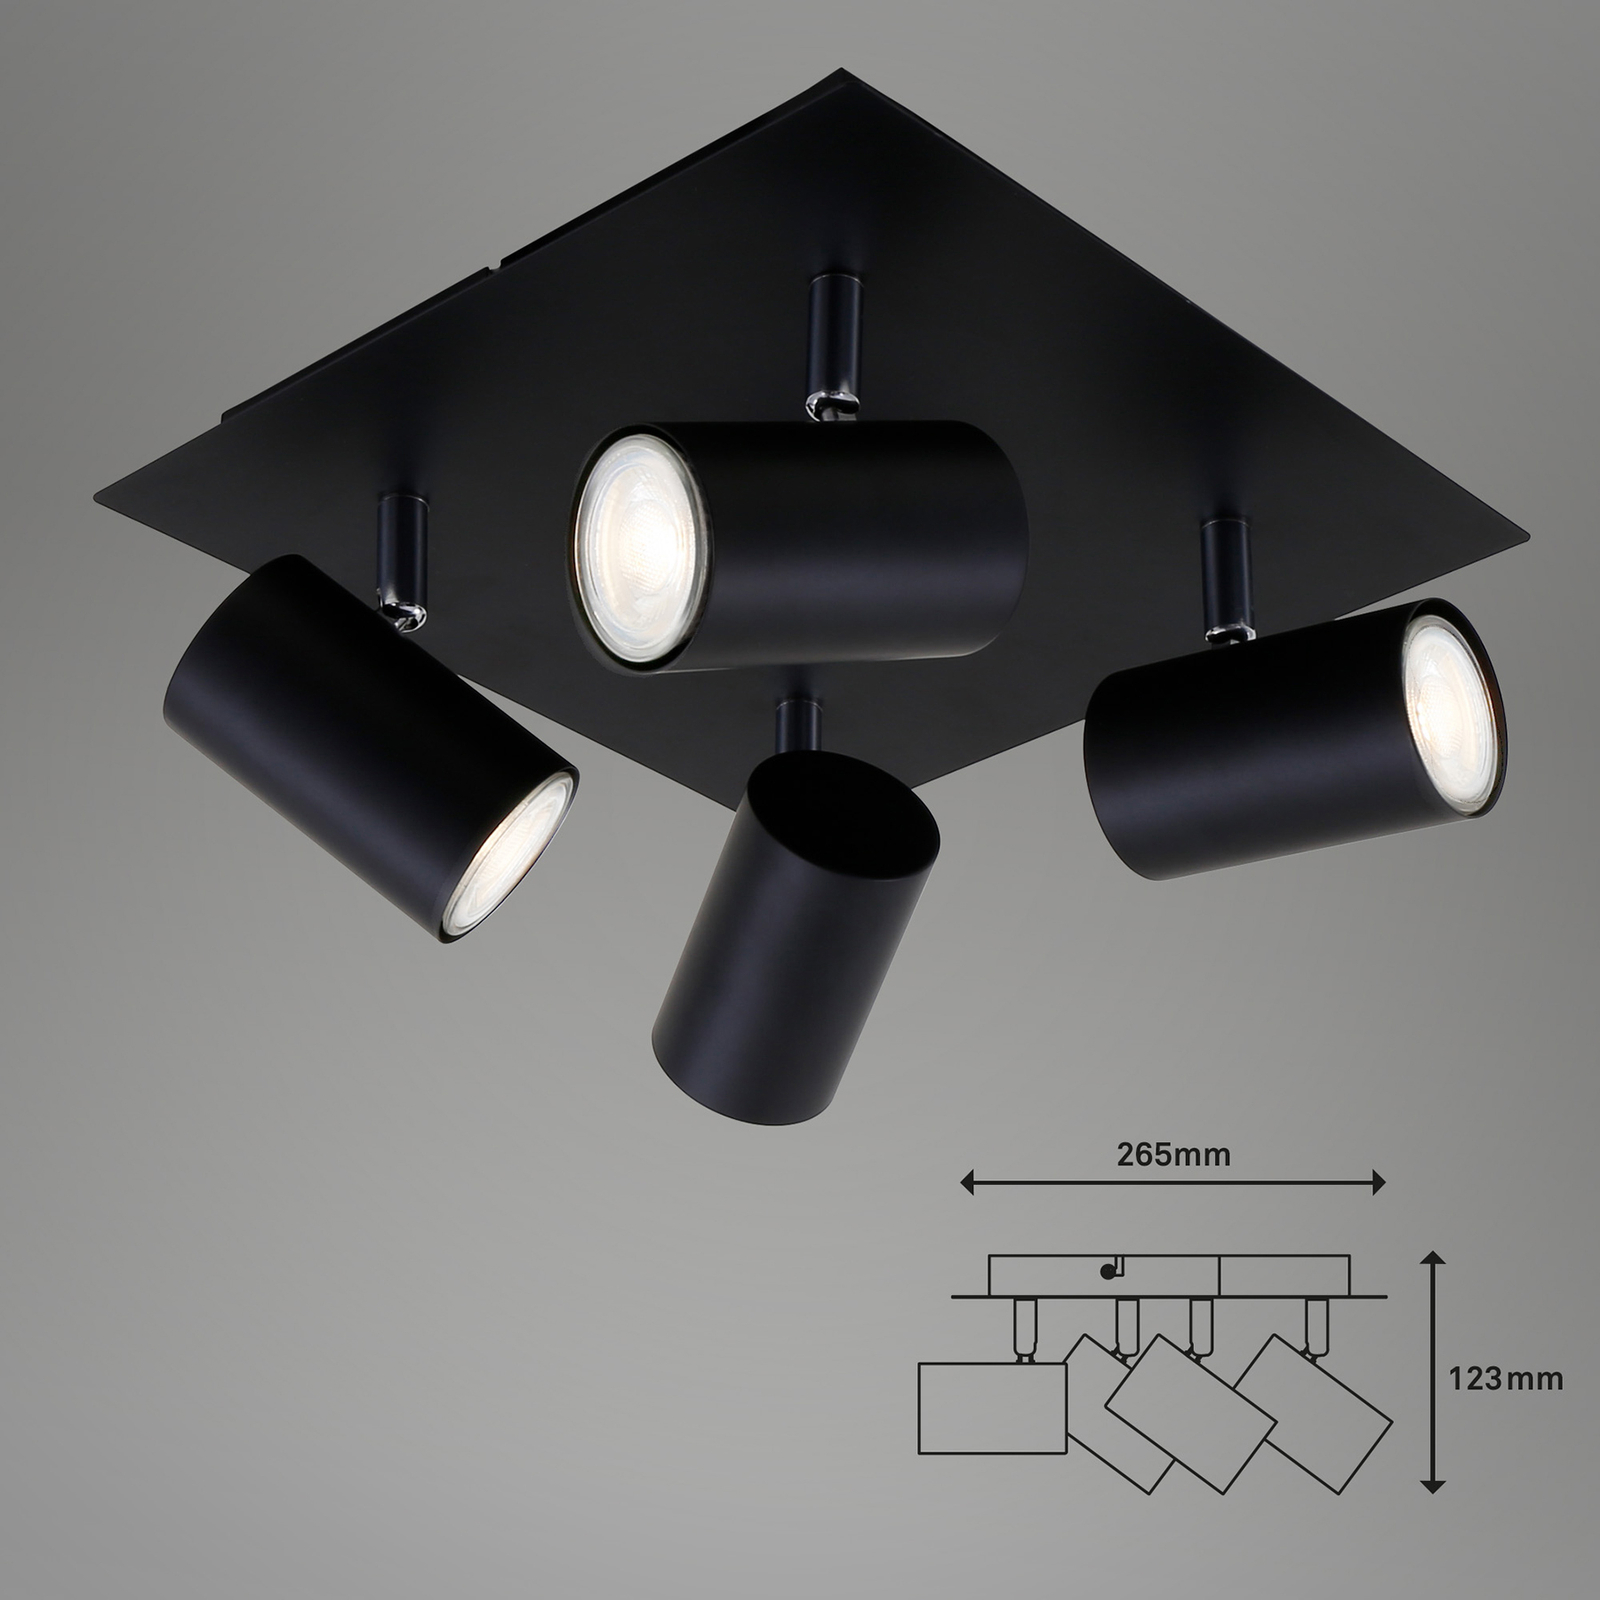 2857-045 ceiling light, pivotable, 4-bulb, black